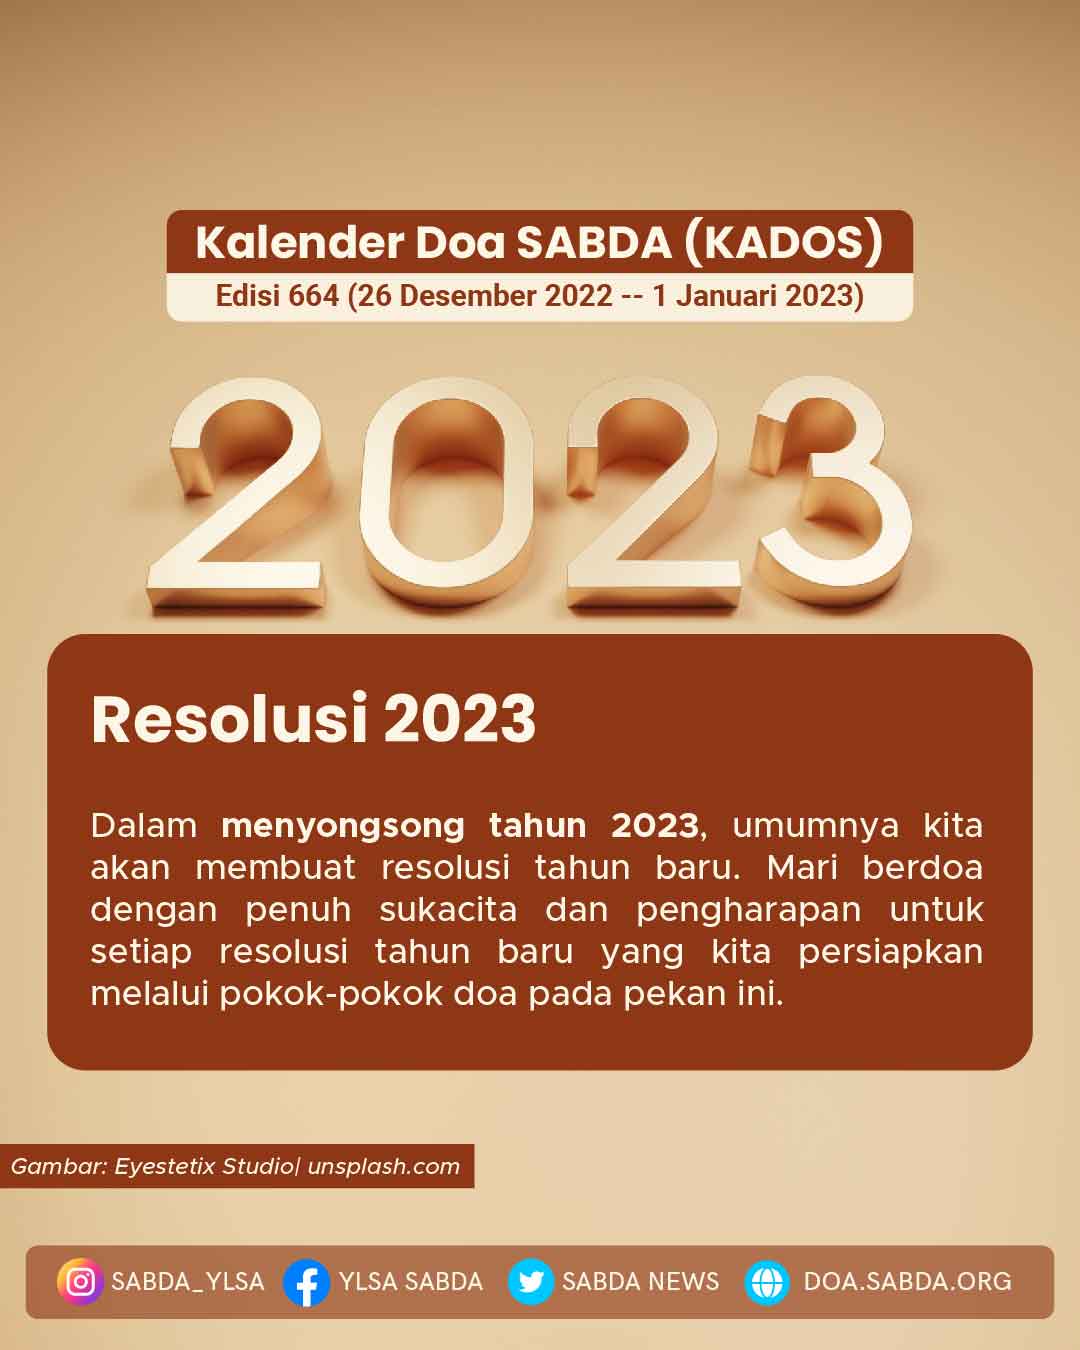 Pokok Doa KADOS 26 Desember 2022 -- 1 Januari 2023